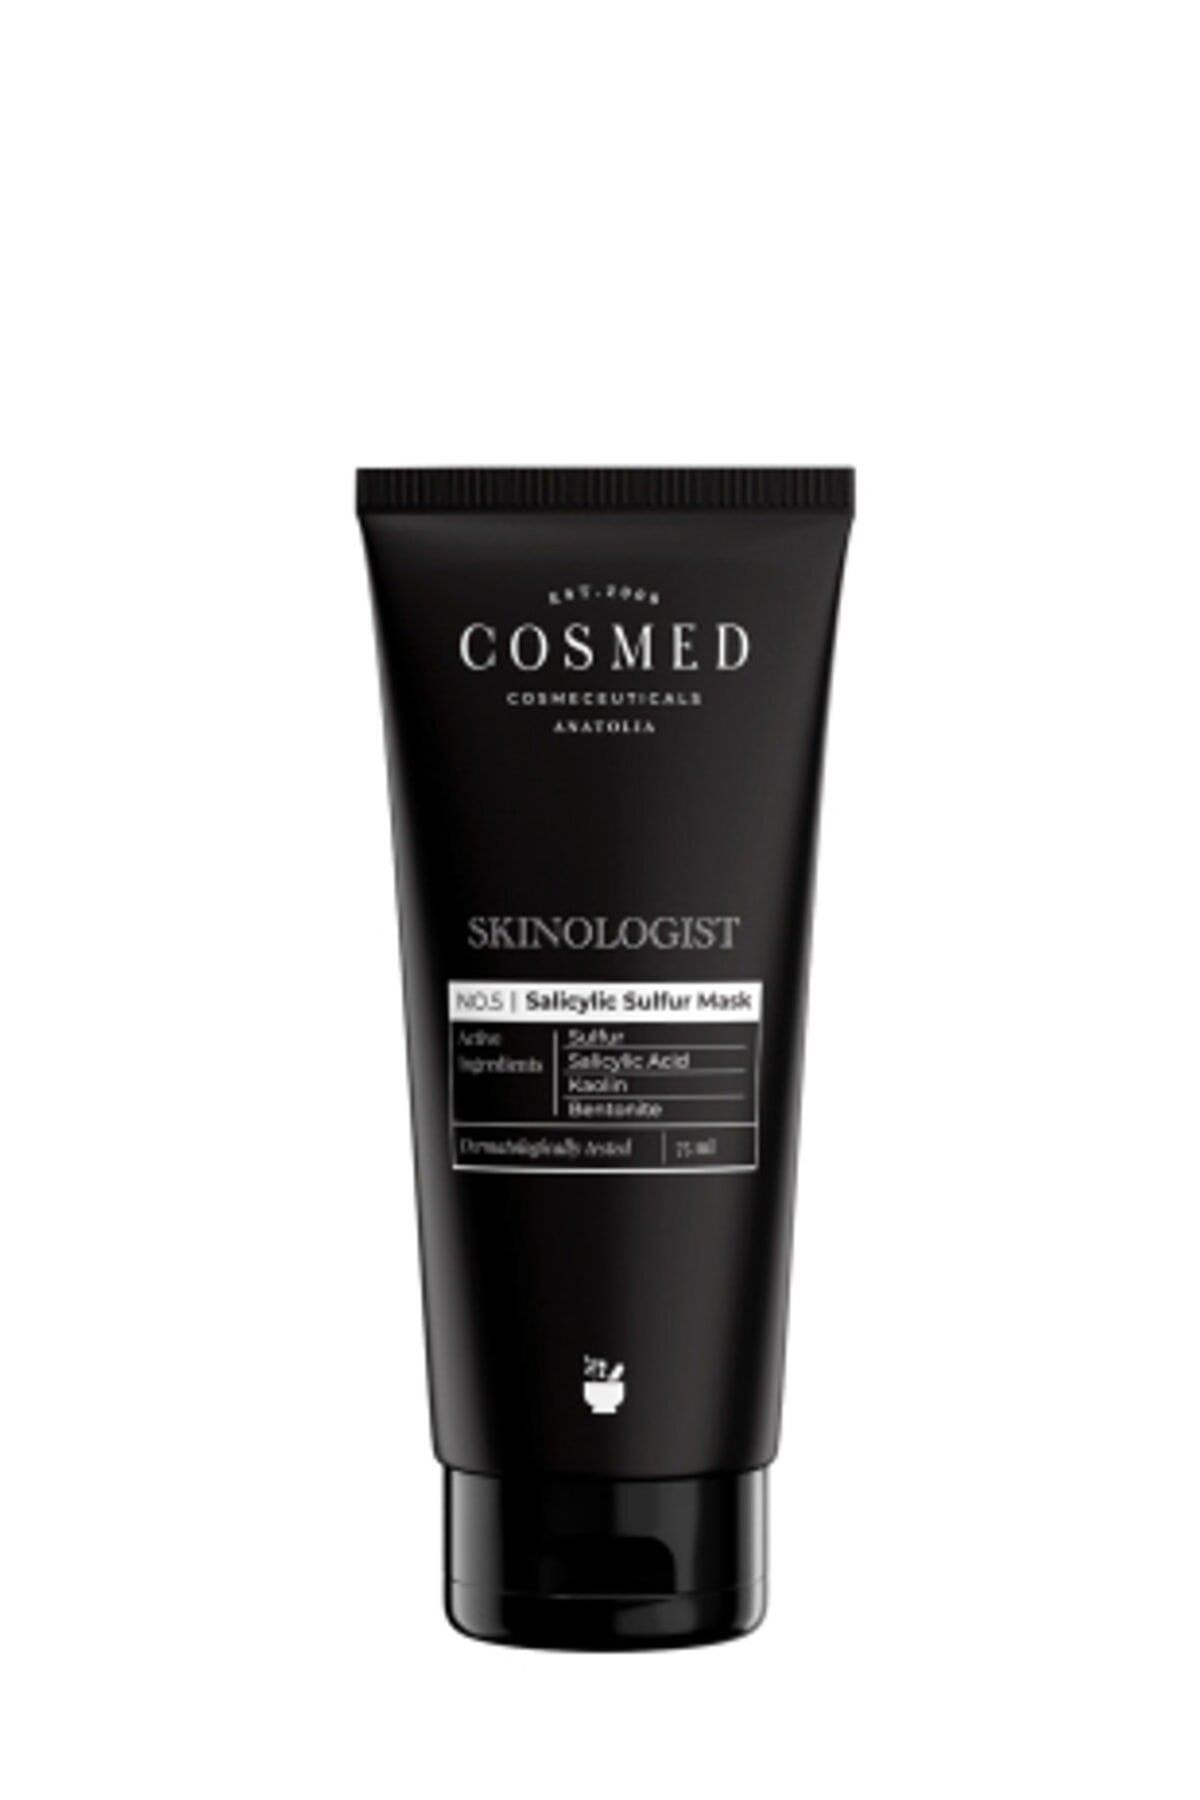 Cosmedi Cosmed Skinologist Salıcylıc Sulfur Mask 75 Ml (csm101)